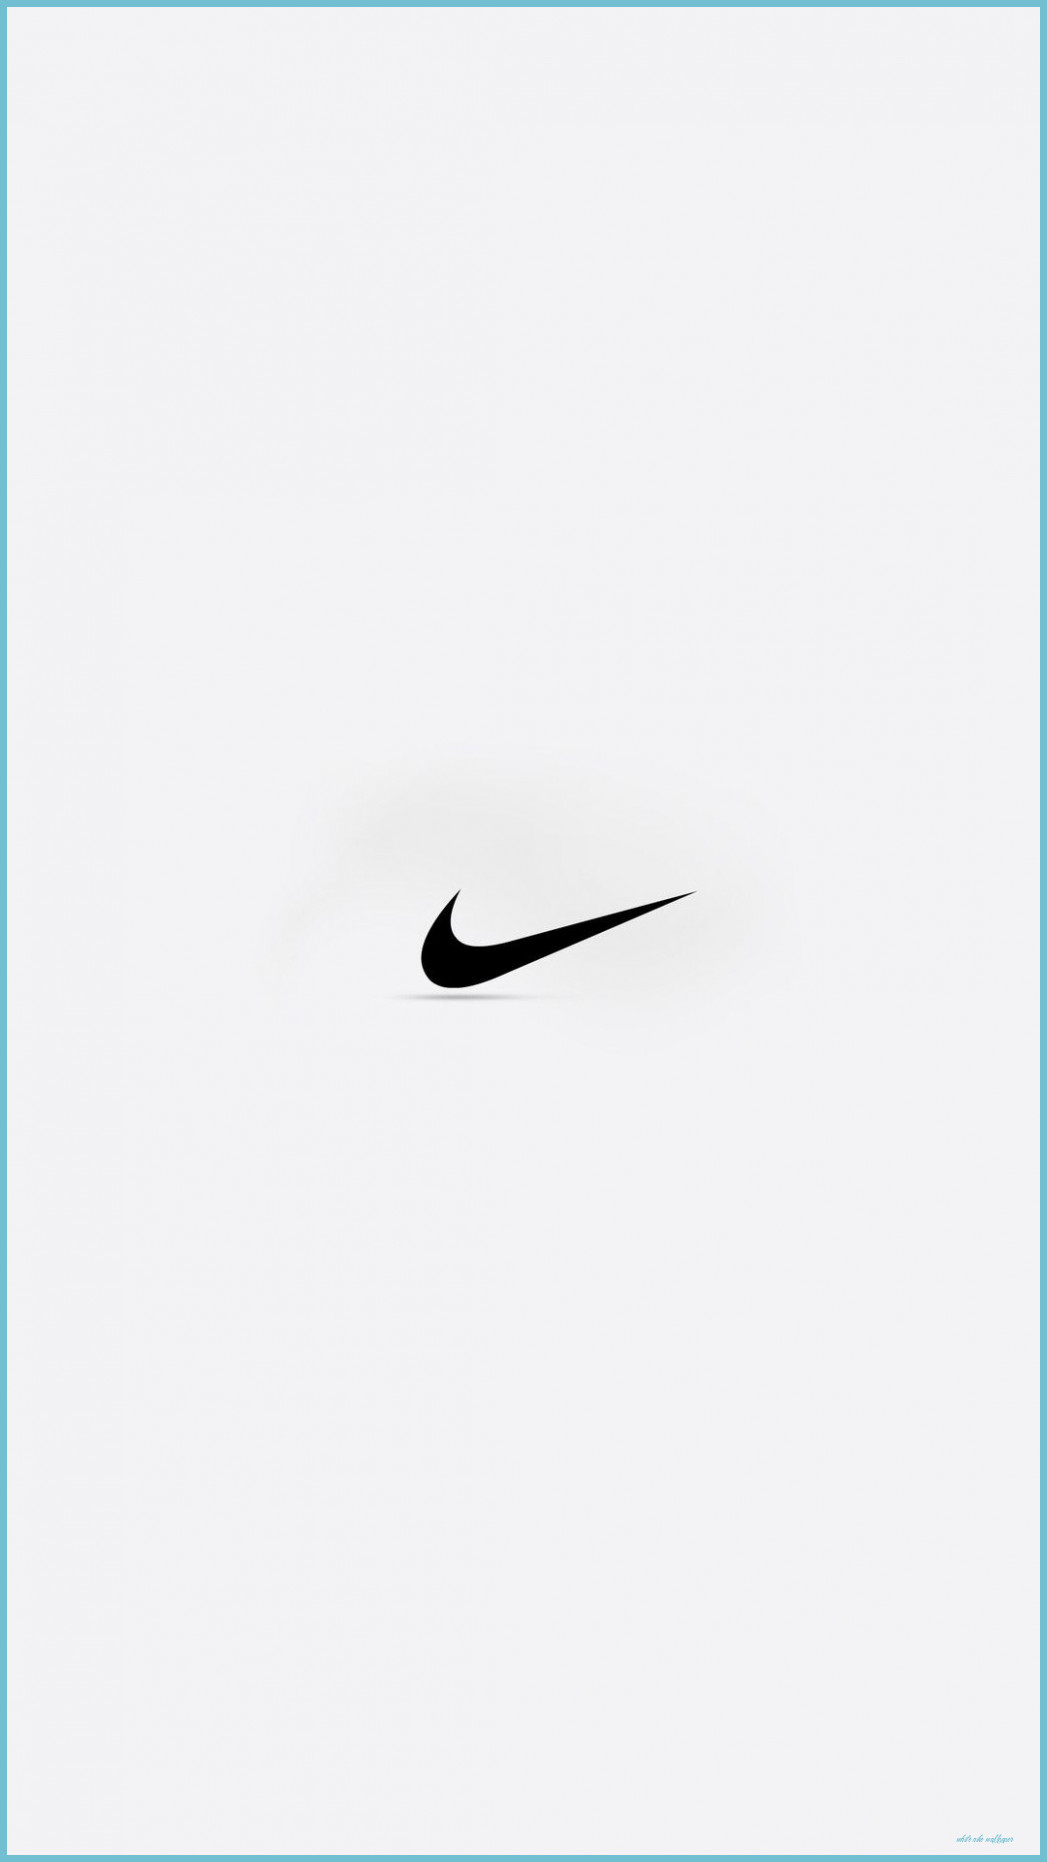 Nike Vertical Wallpapers